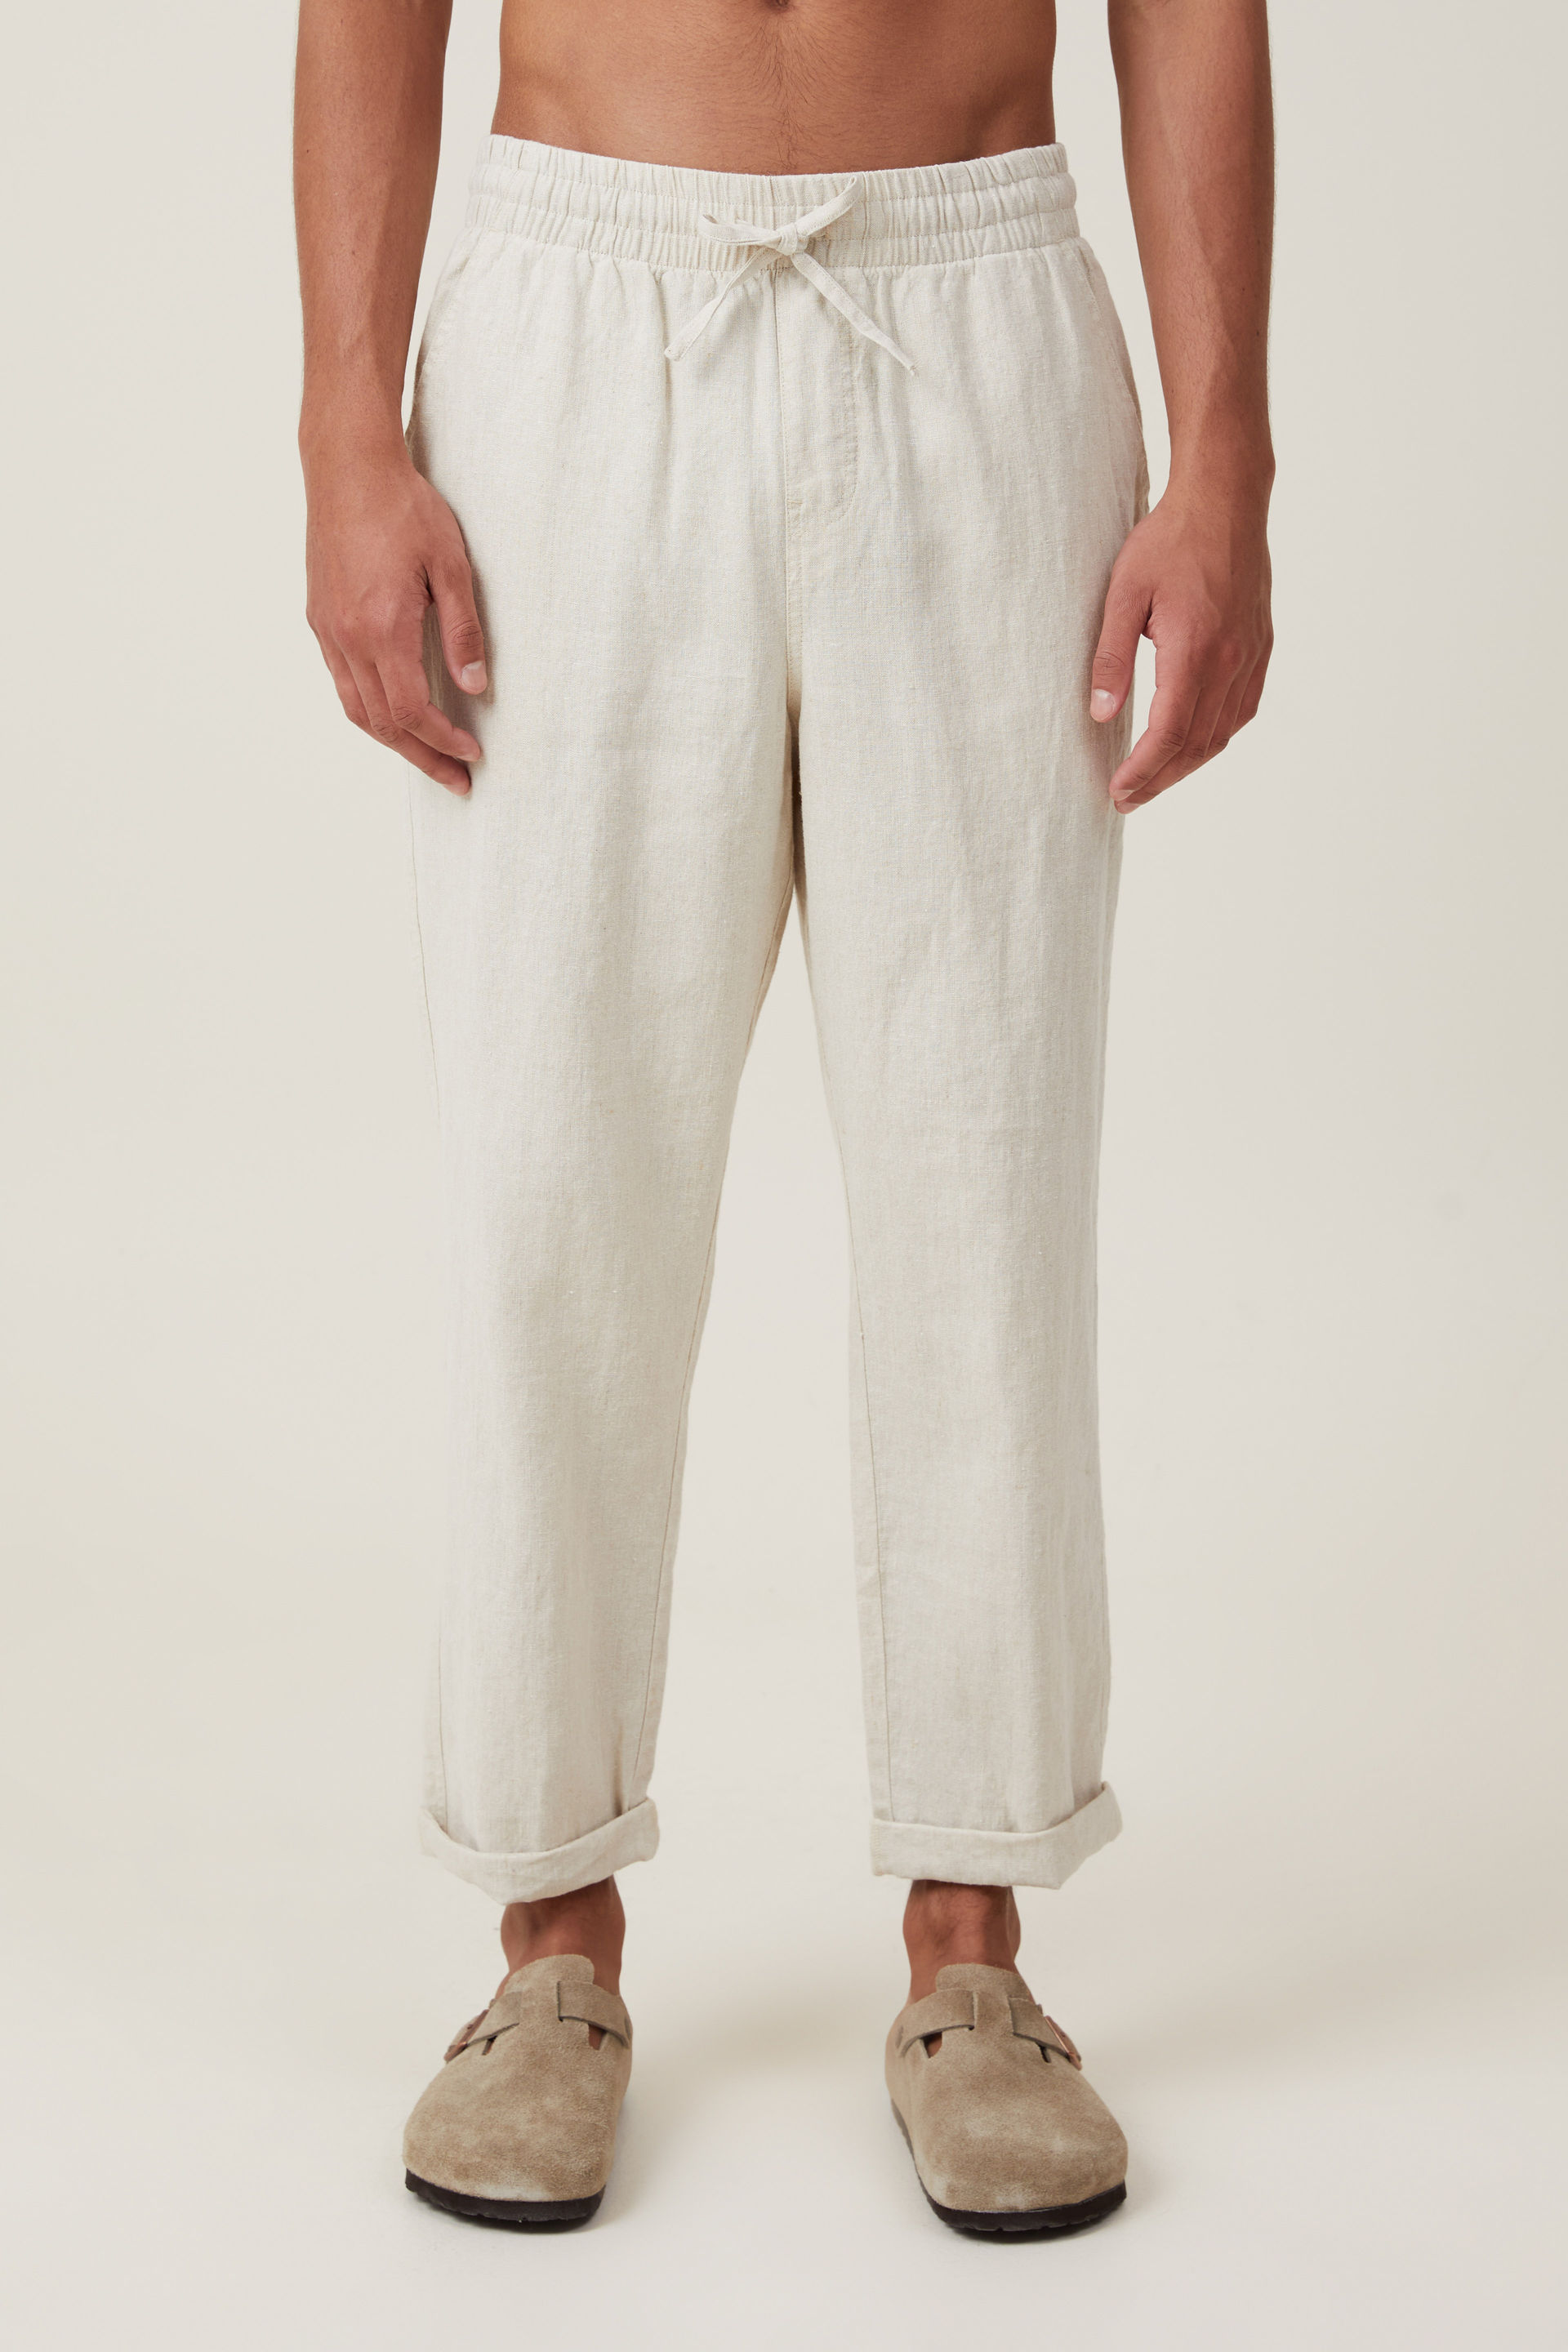 mens+linen+pants | Nordstrom